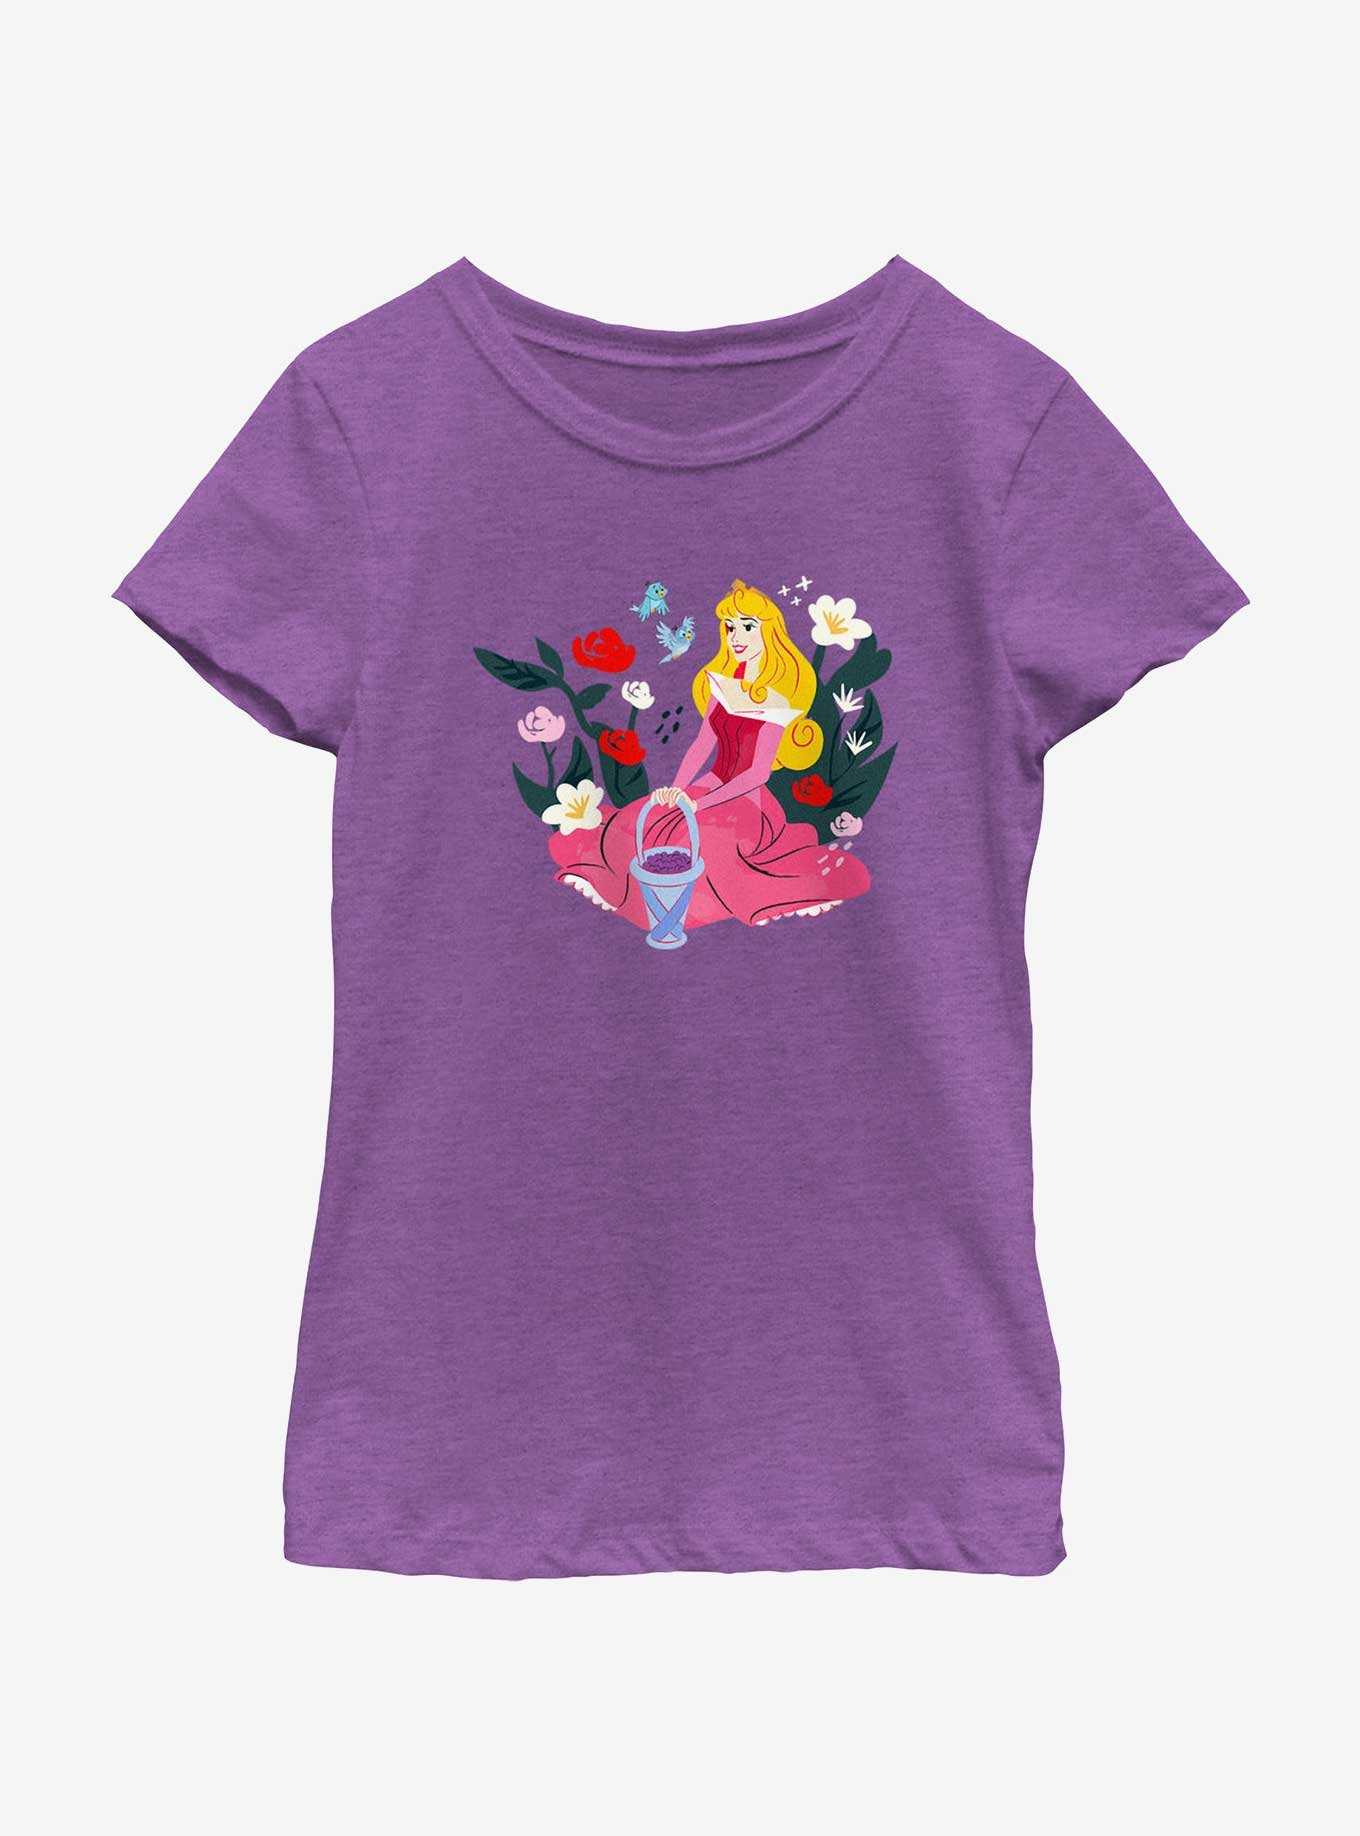 Disney Princesses Aurora With Birds Youth Girls T-Shirt, , hi-res